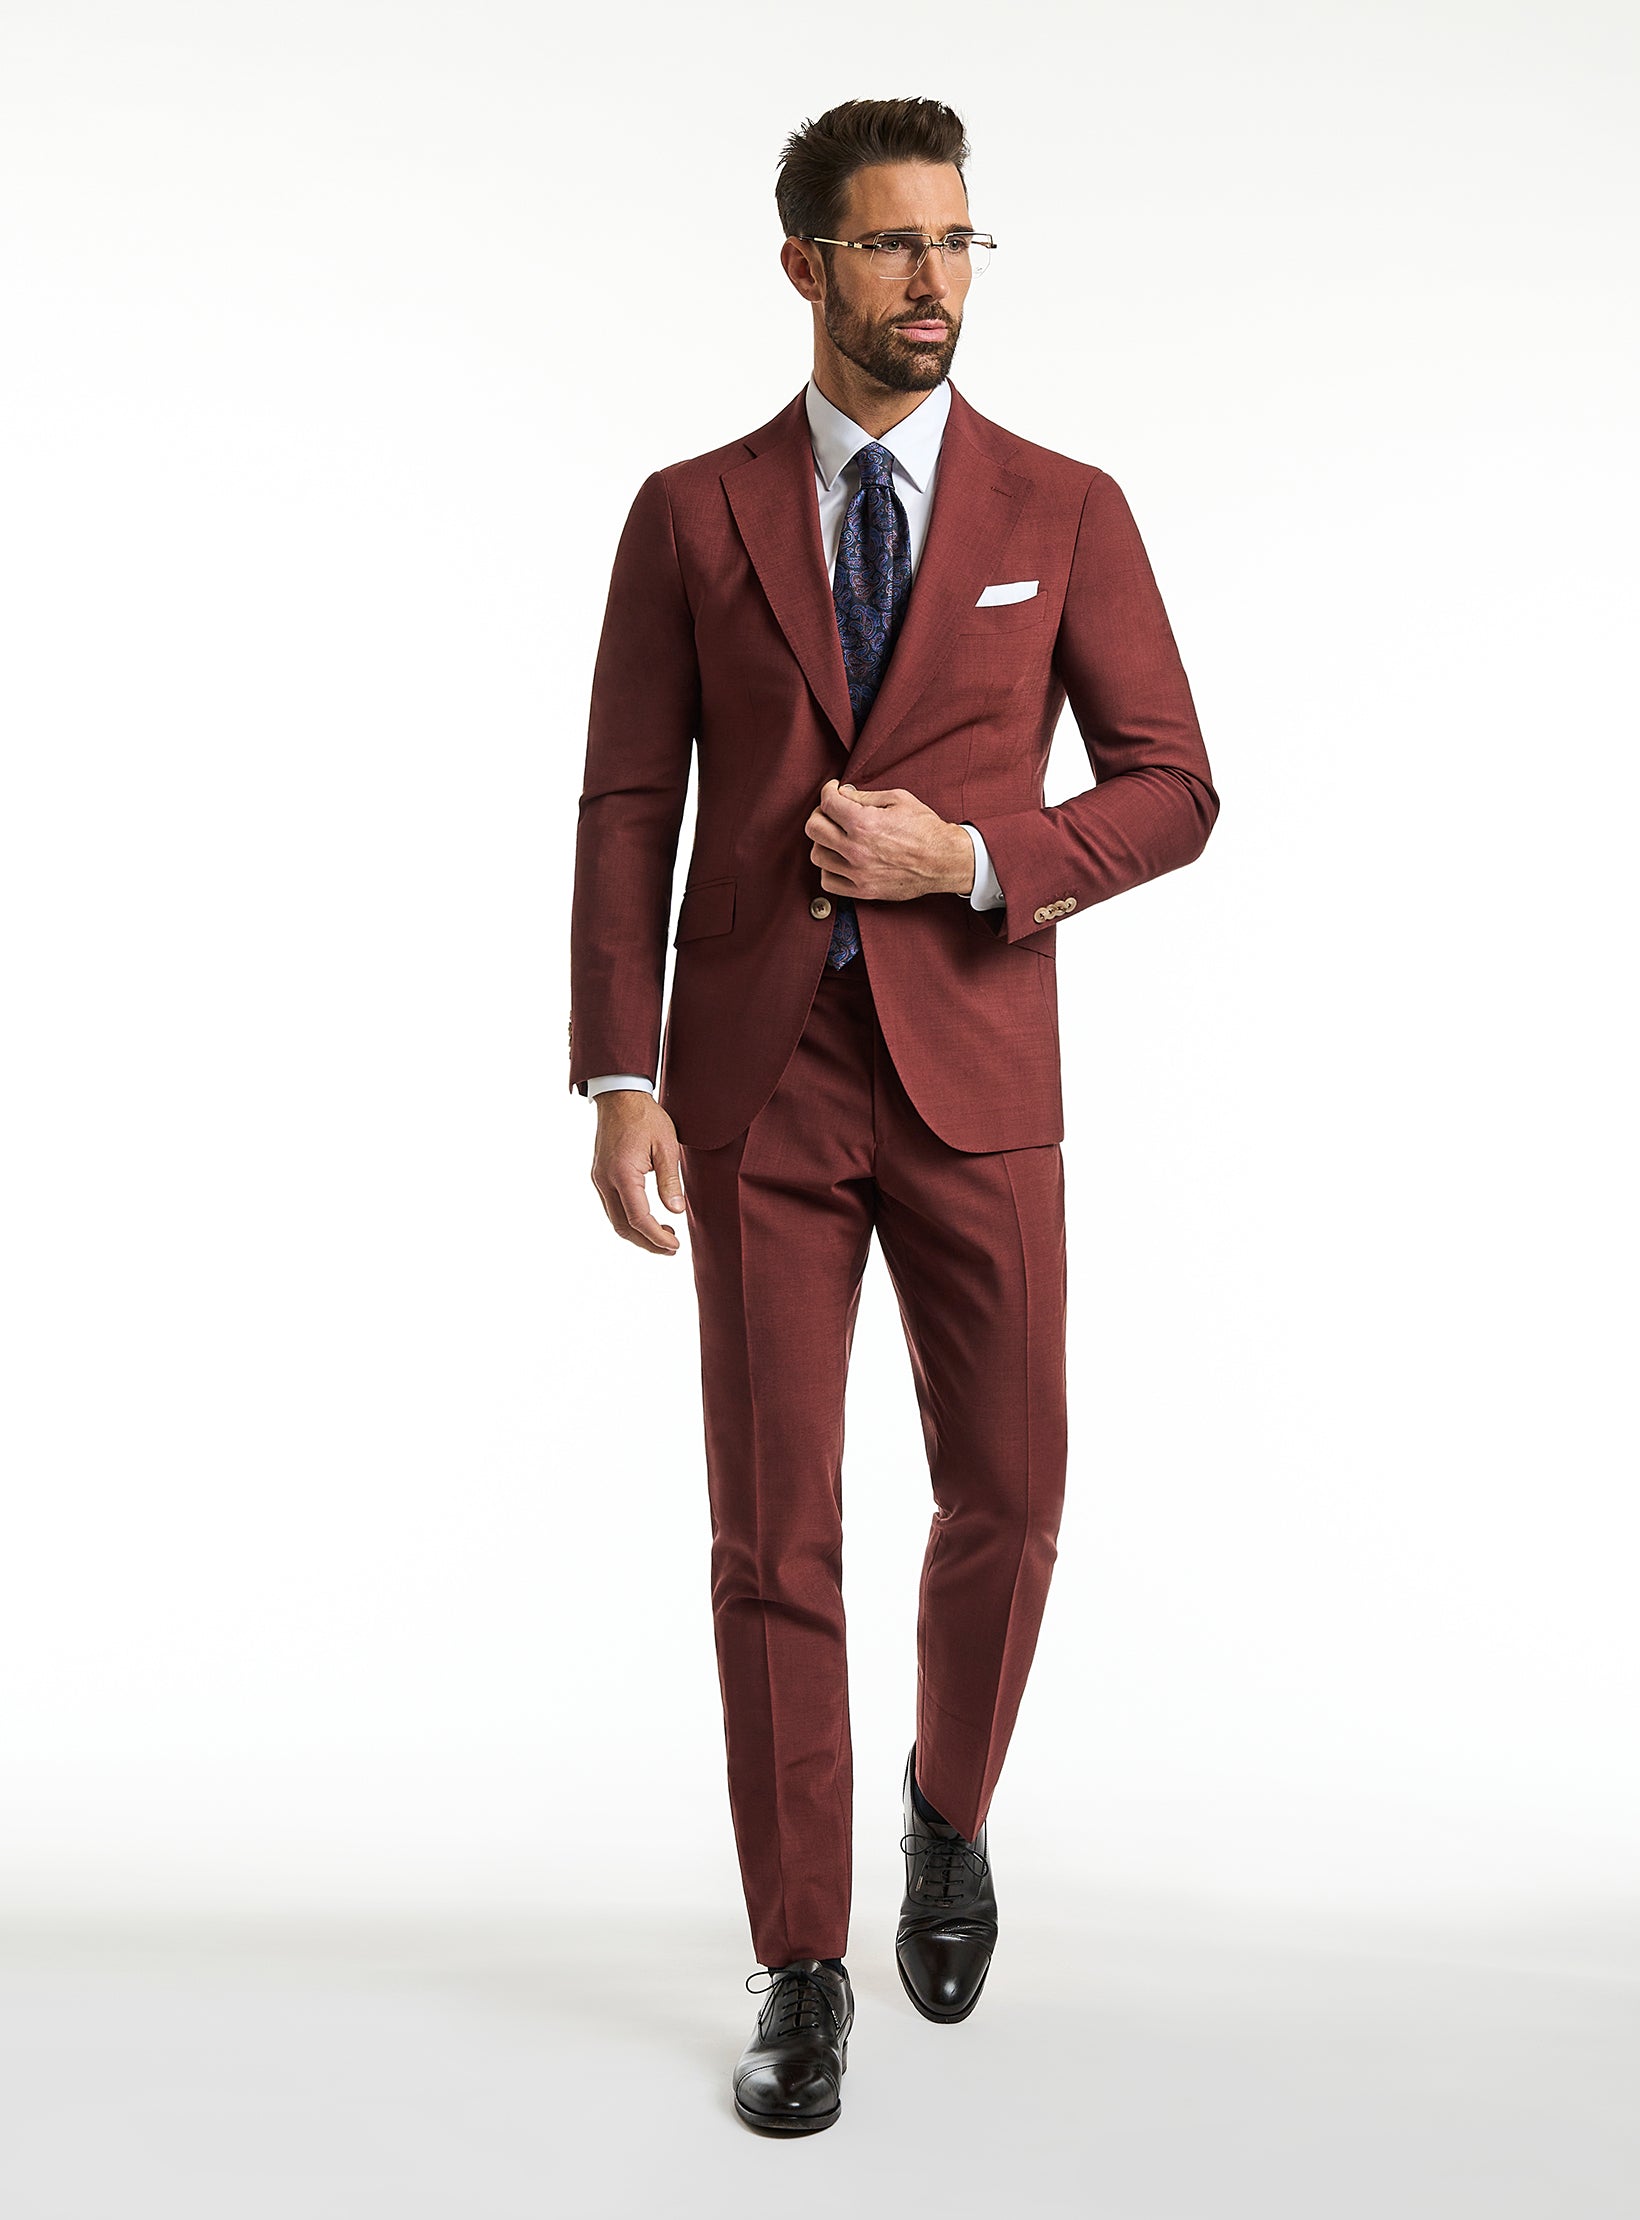 The Burgundy Brilliance Suit